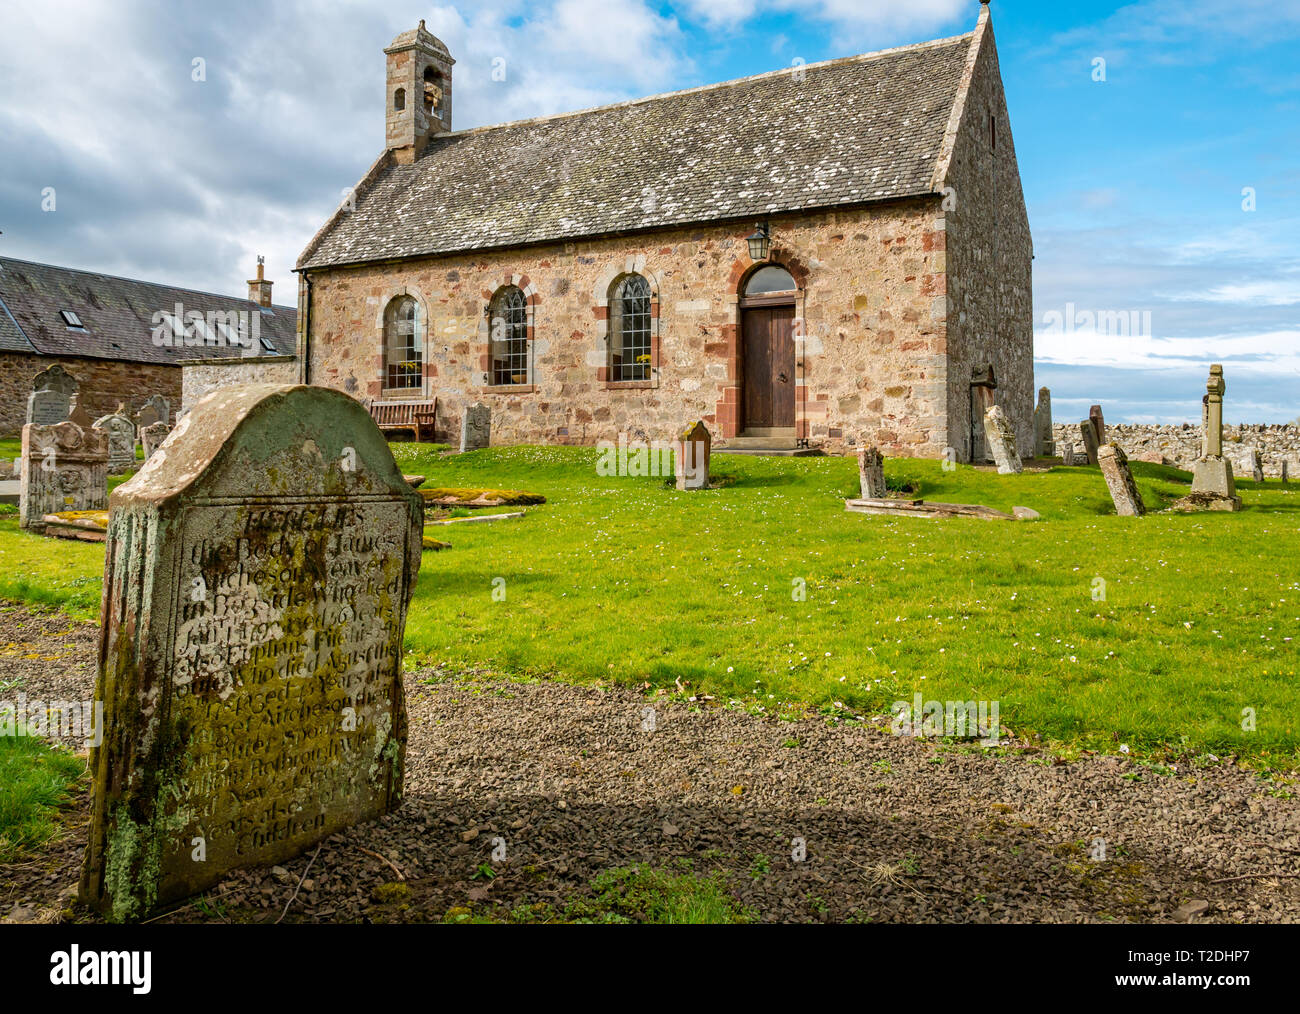 12th century Morham Parish Church and old graveyard with worn gravestones, East Lothian, Scotland, UK Stock Photo